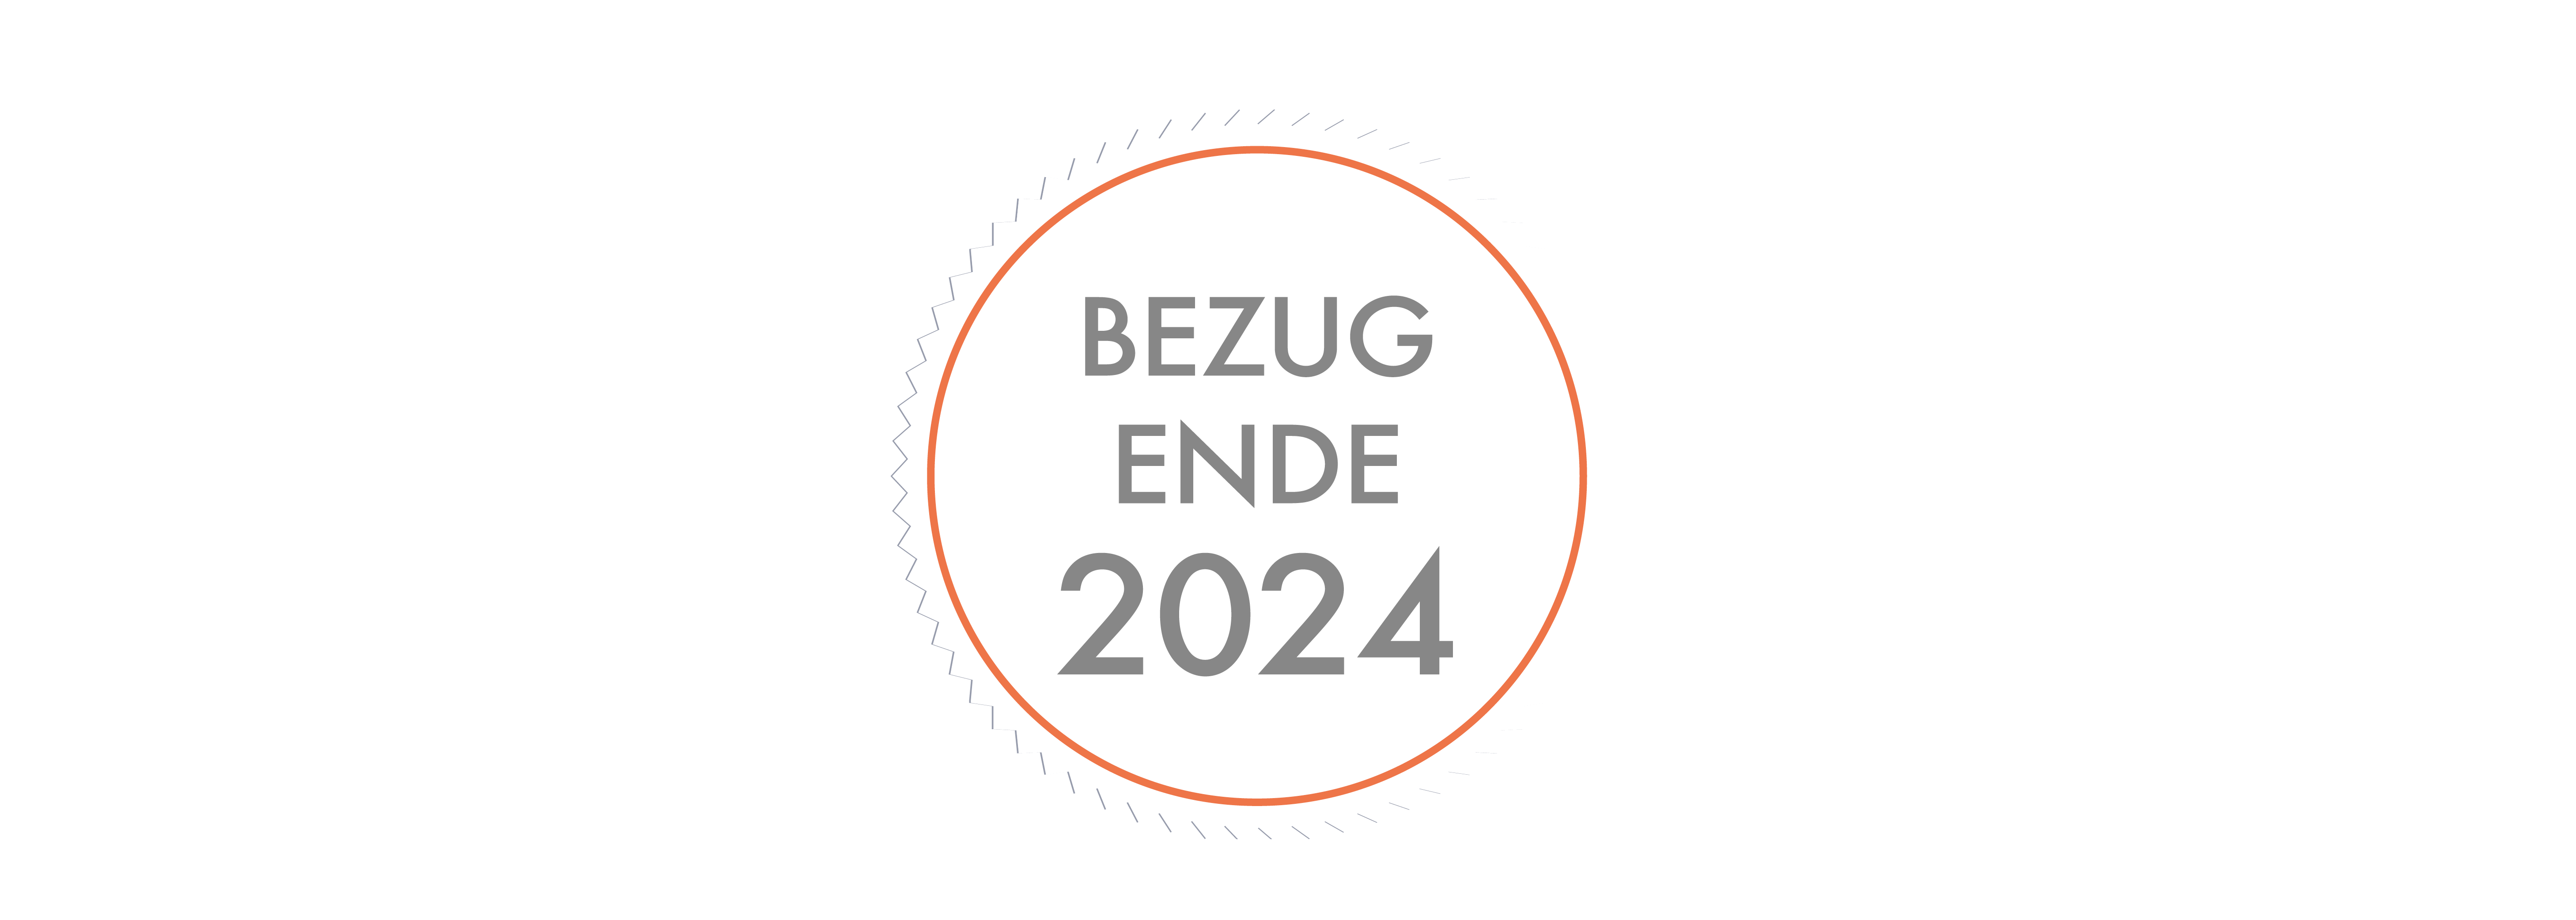 bezug_ende-2024.png